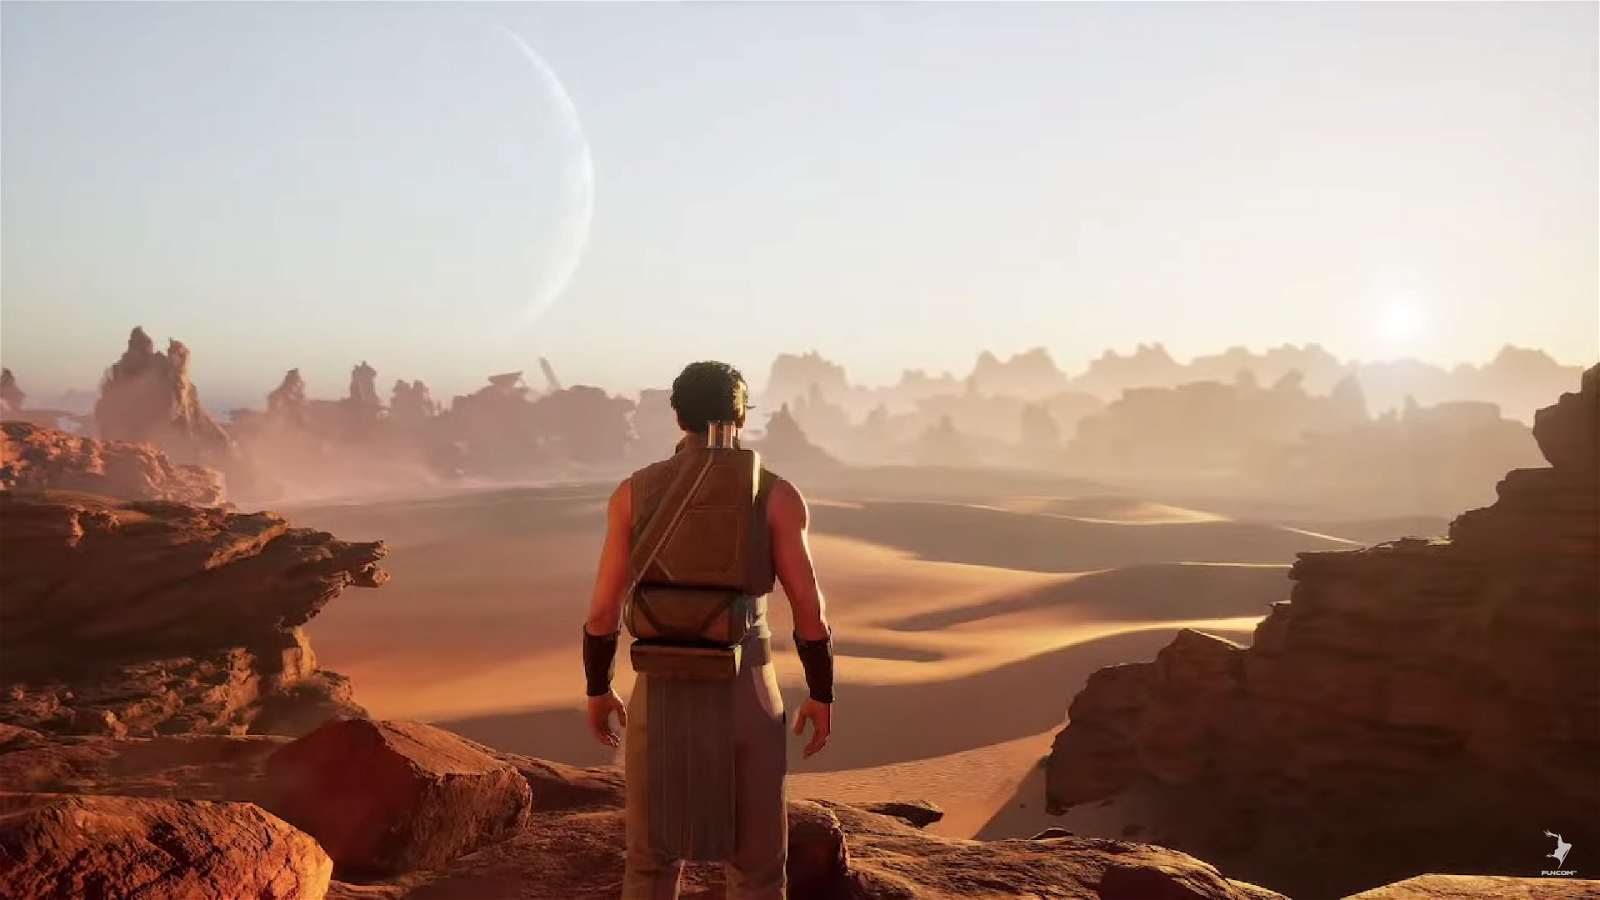 A still of the gameplay of Dune: Awakening